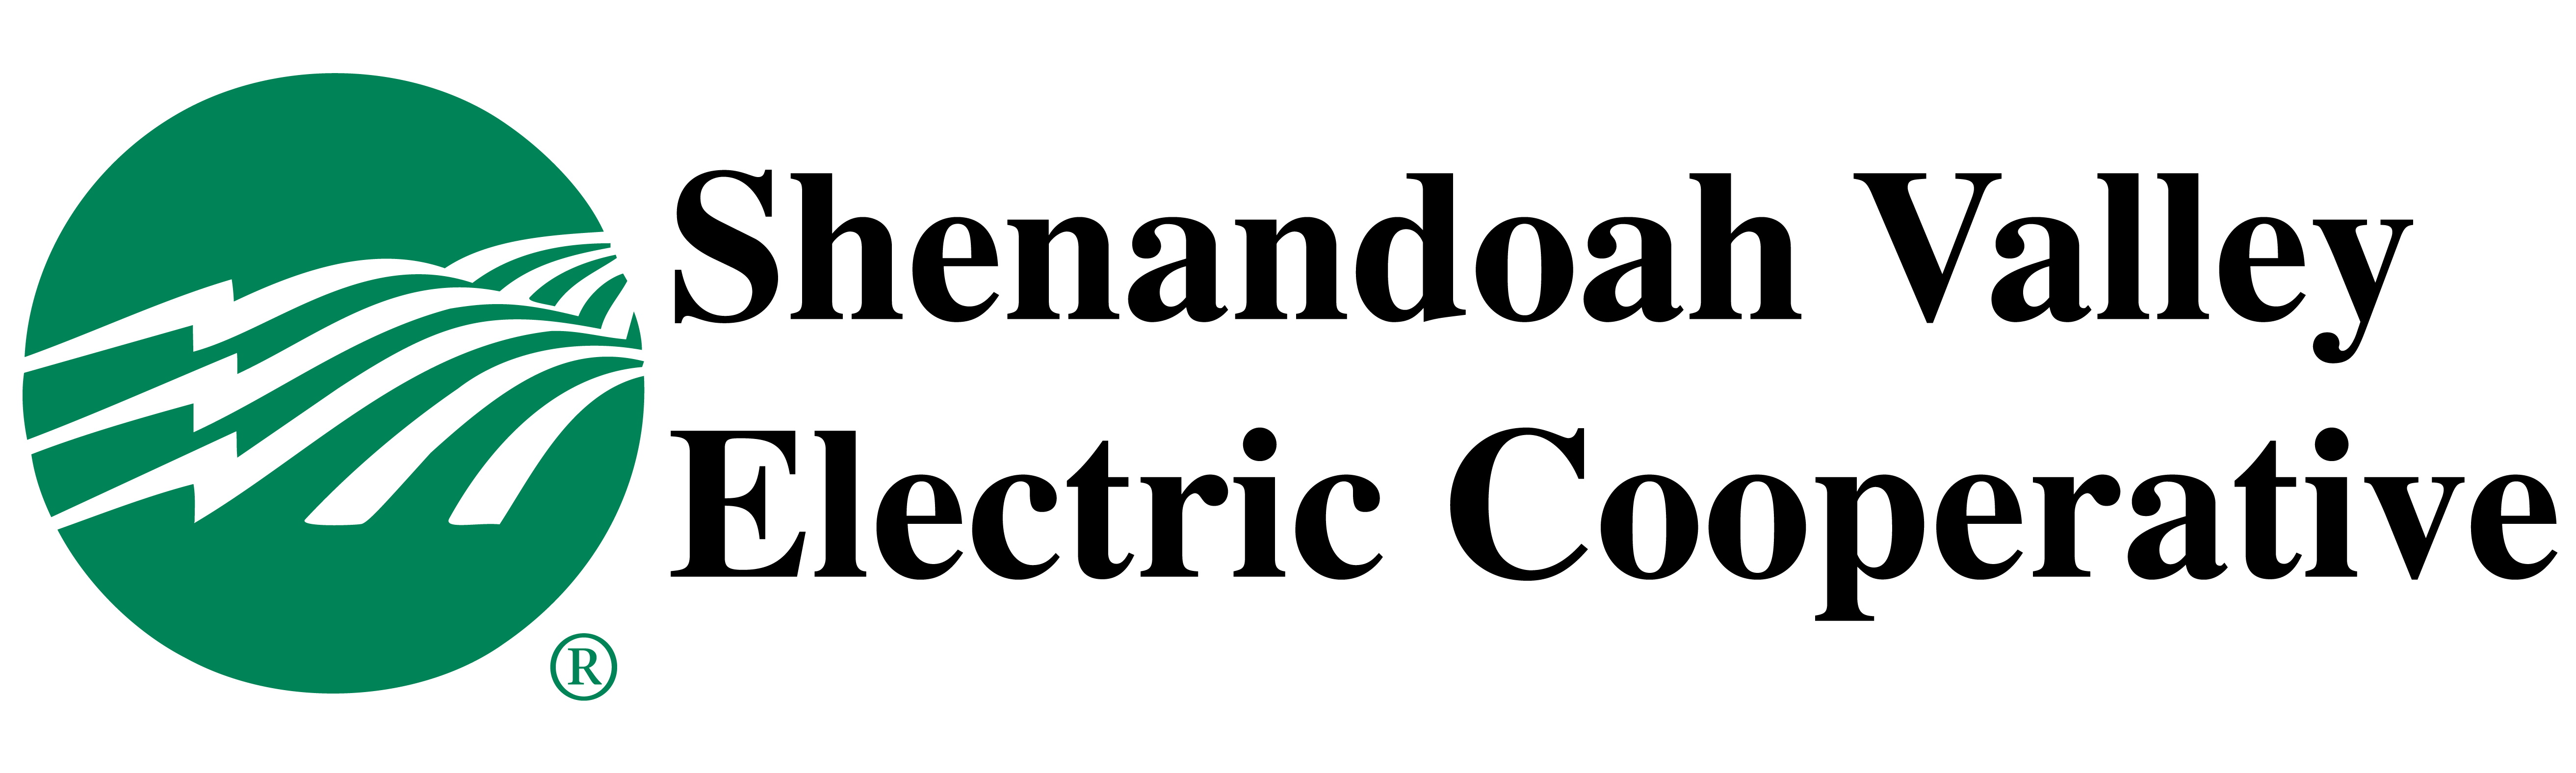 Shenandoah Valley Electric Coop